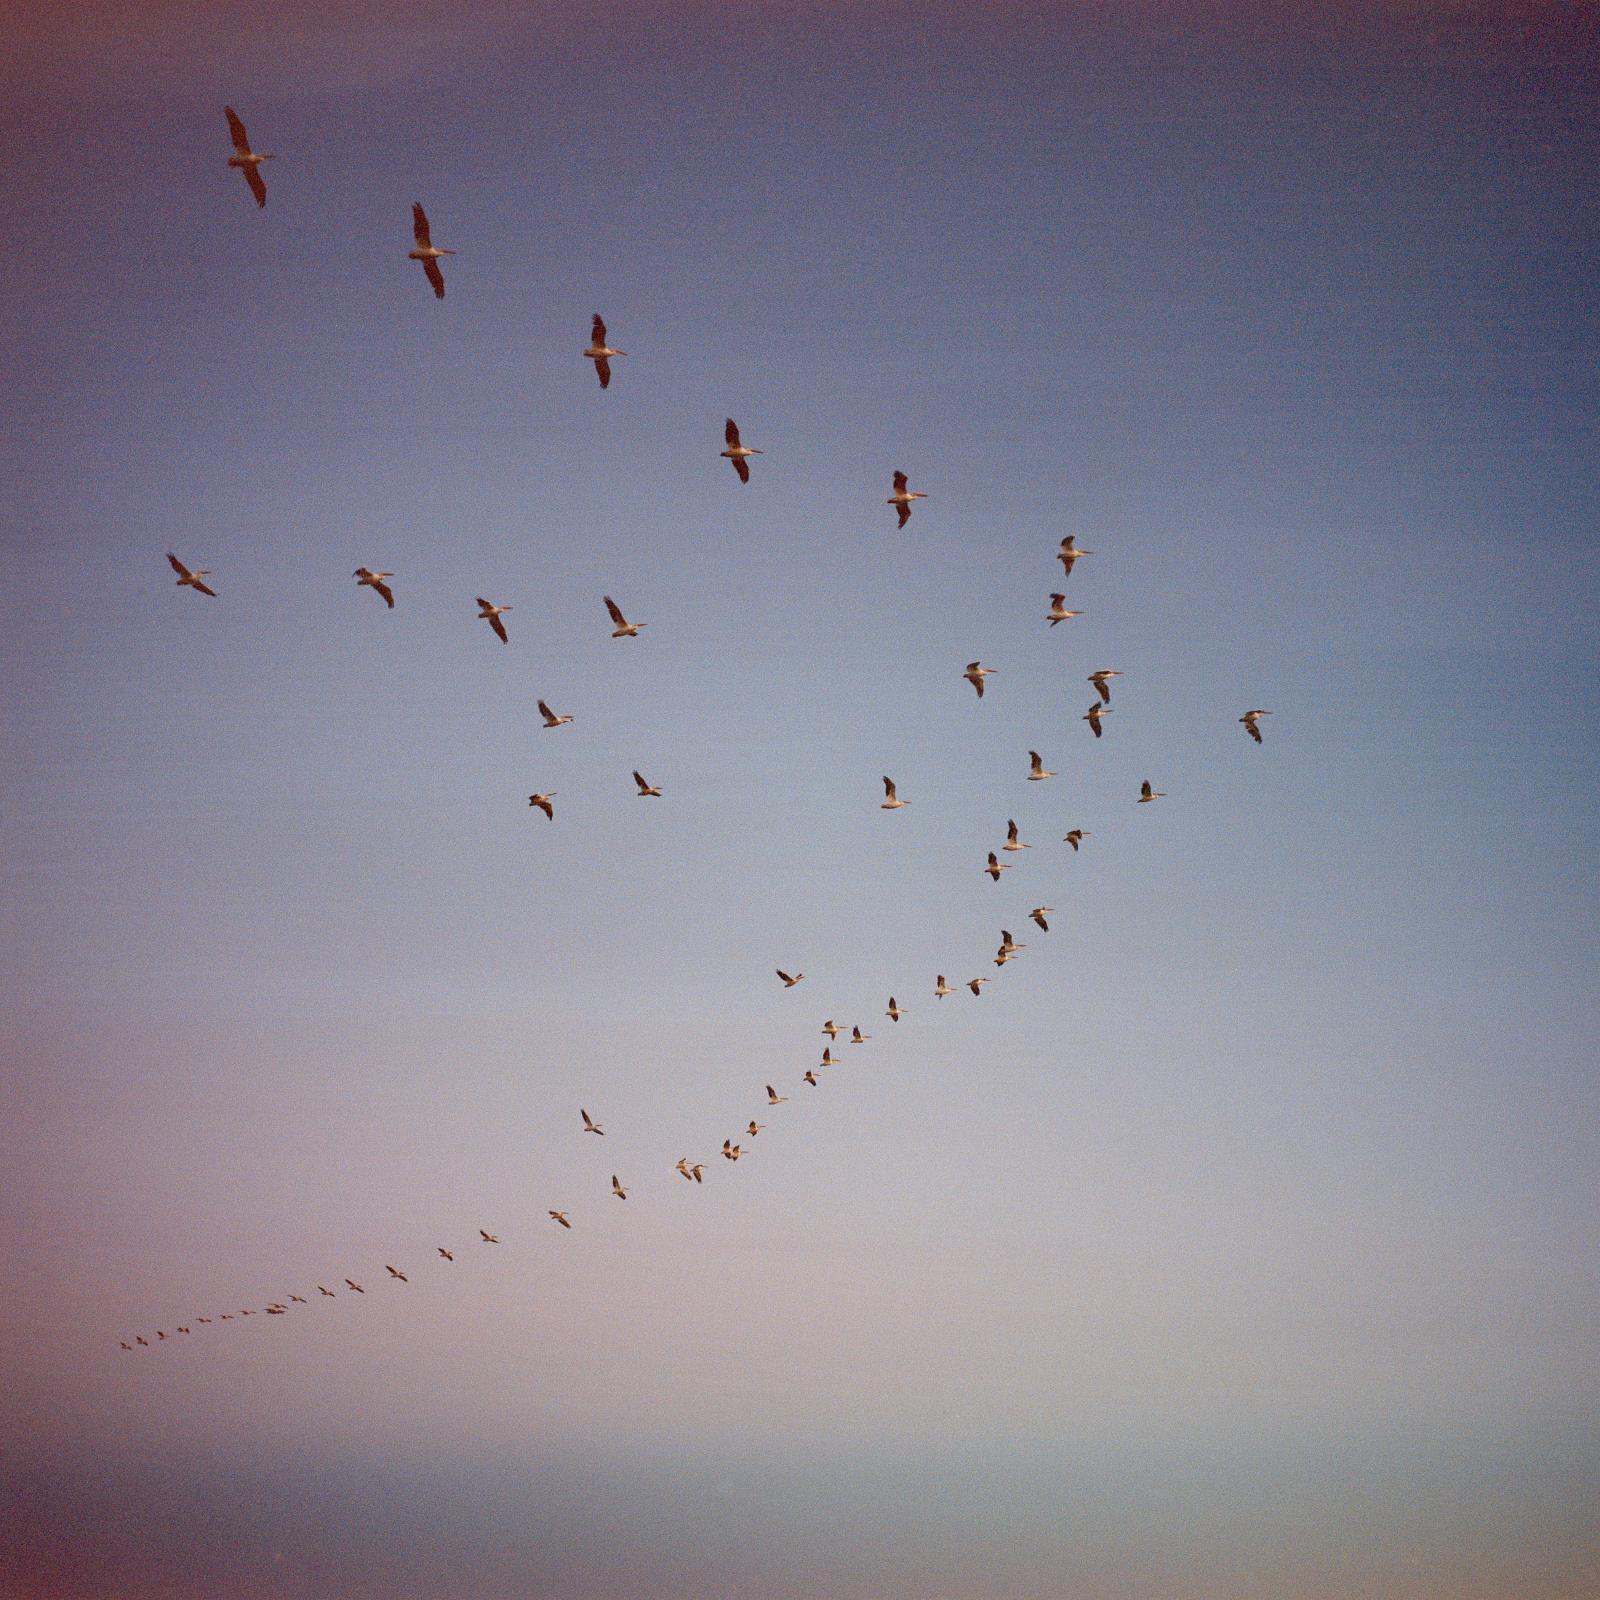 Pelicans migrate over Lake Winnipeg in Northern Manitoba, Canada. 2016 